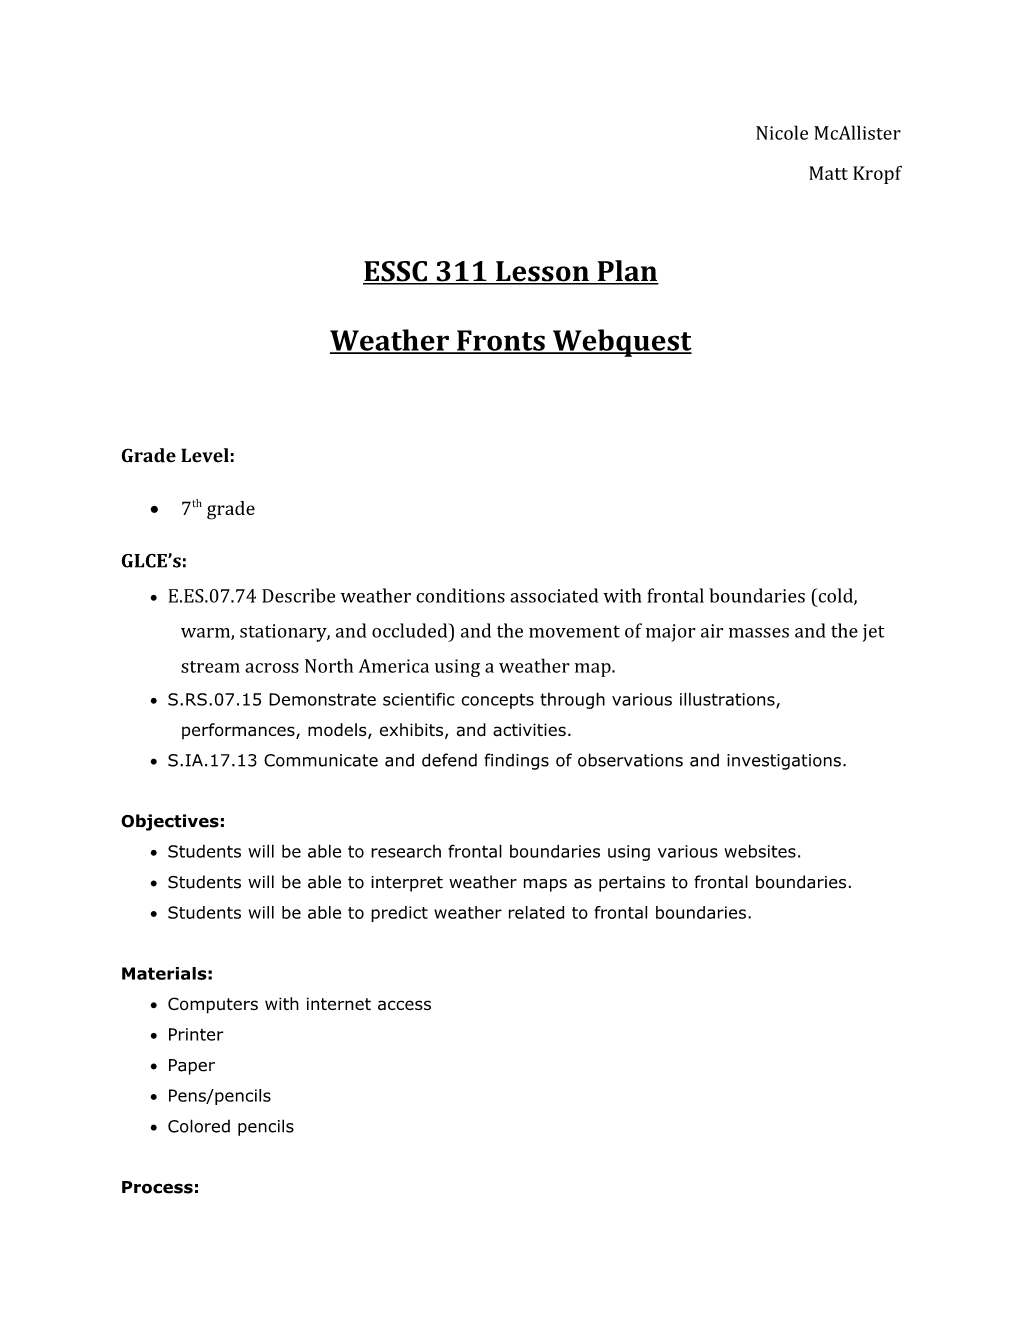 ESSC 311 Lesson Plan